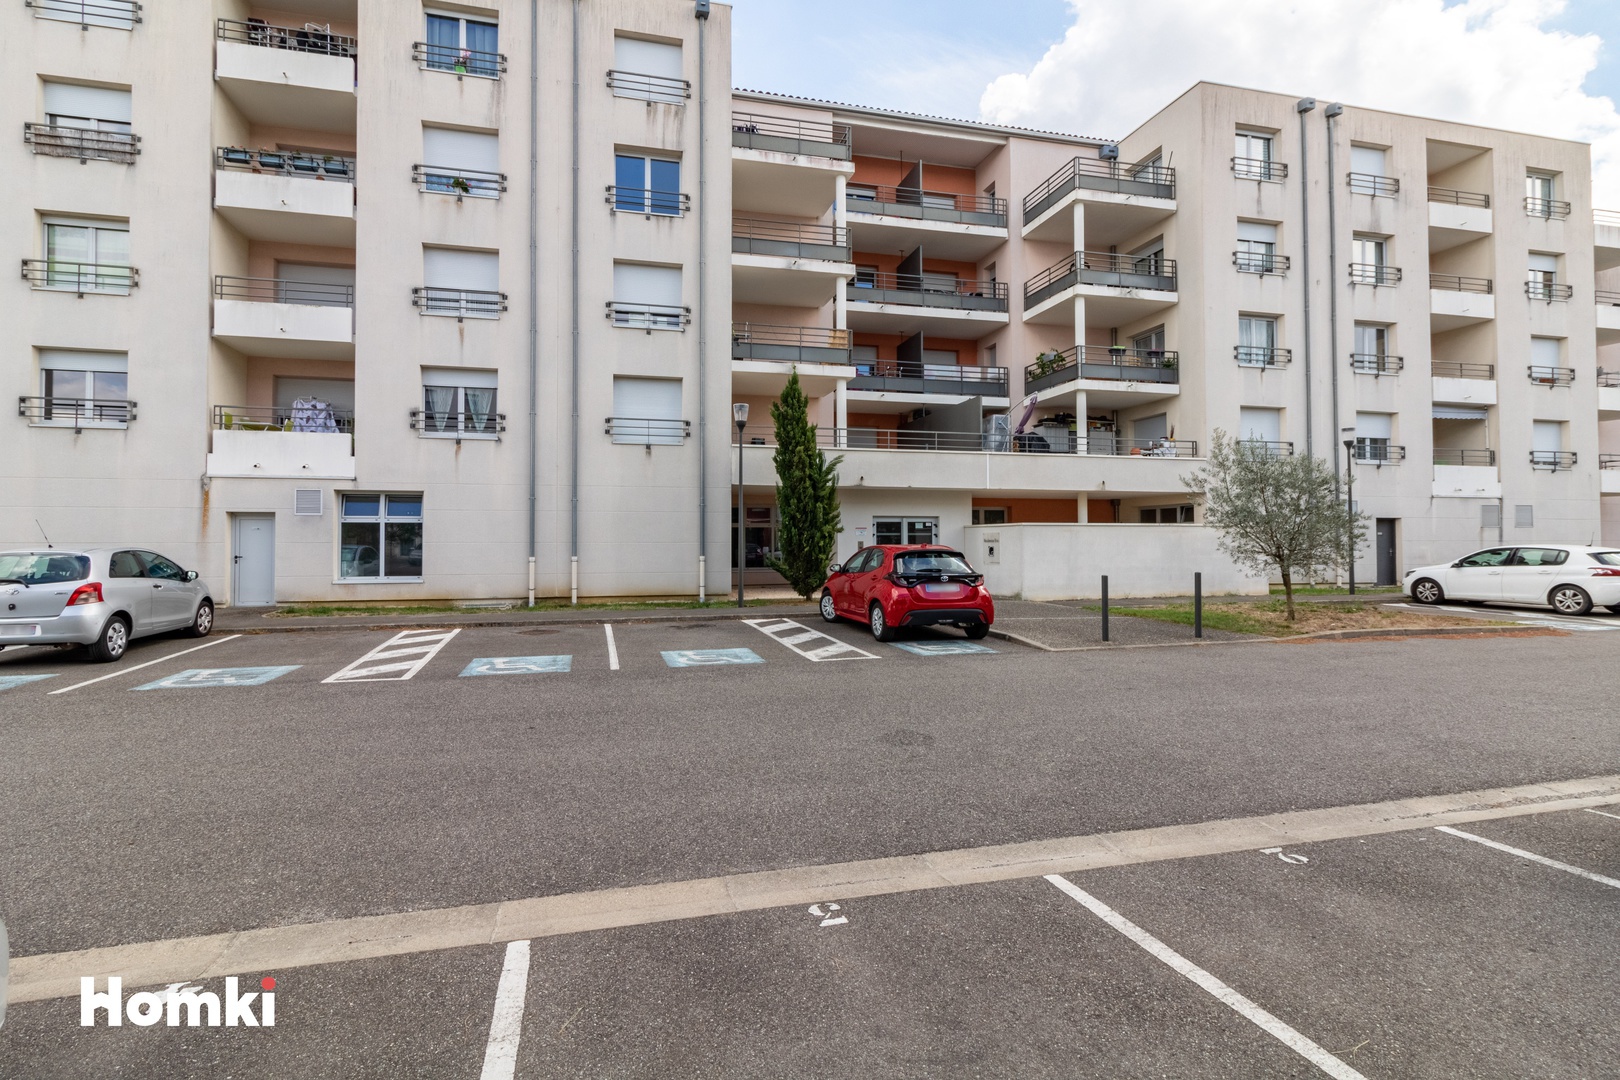 Homki - Vente Appartement  de 66.0 m² à Cornebarrieu 31700